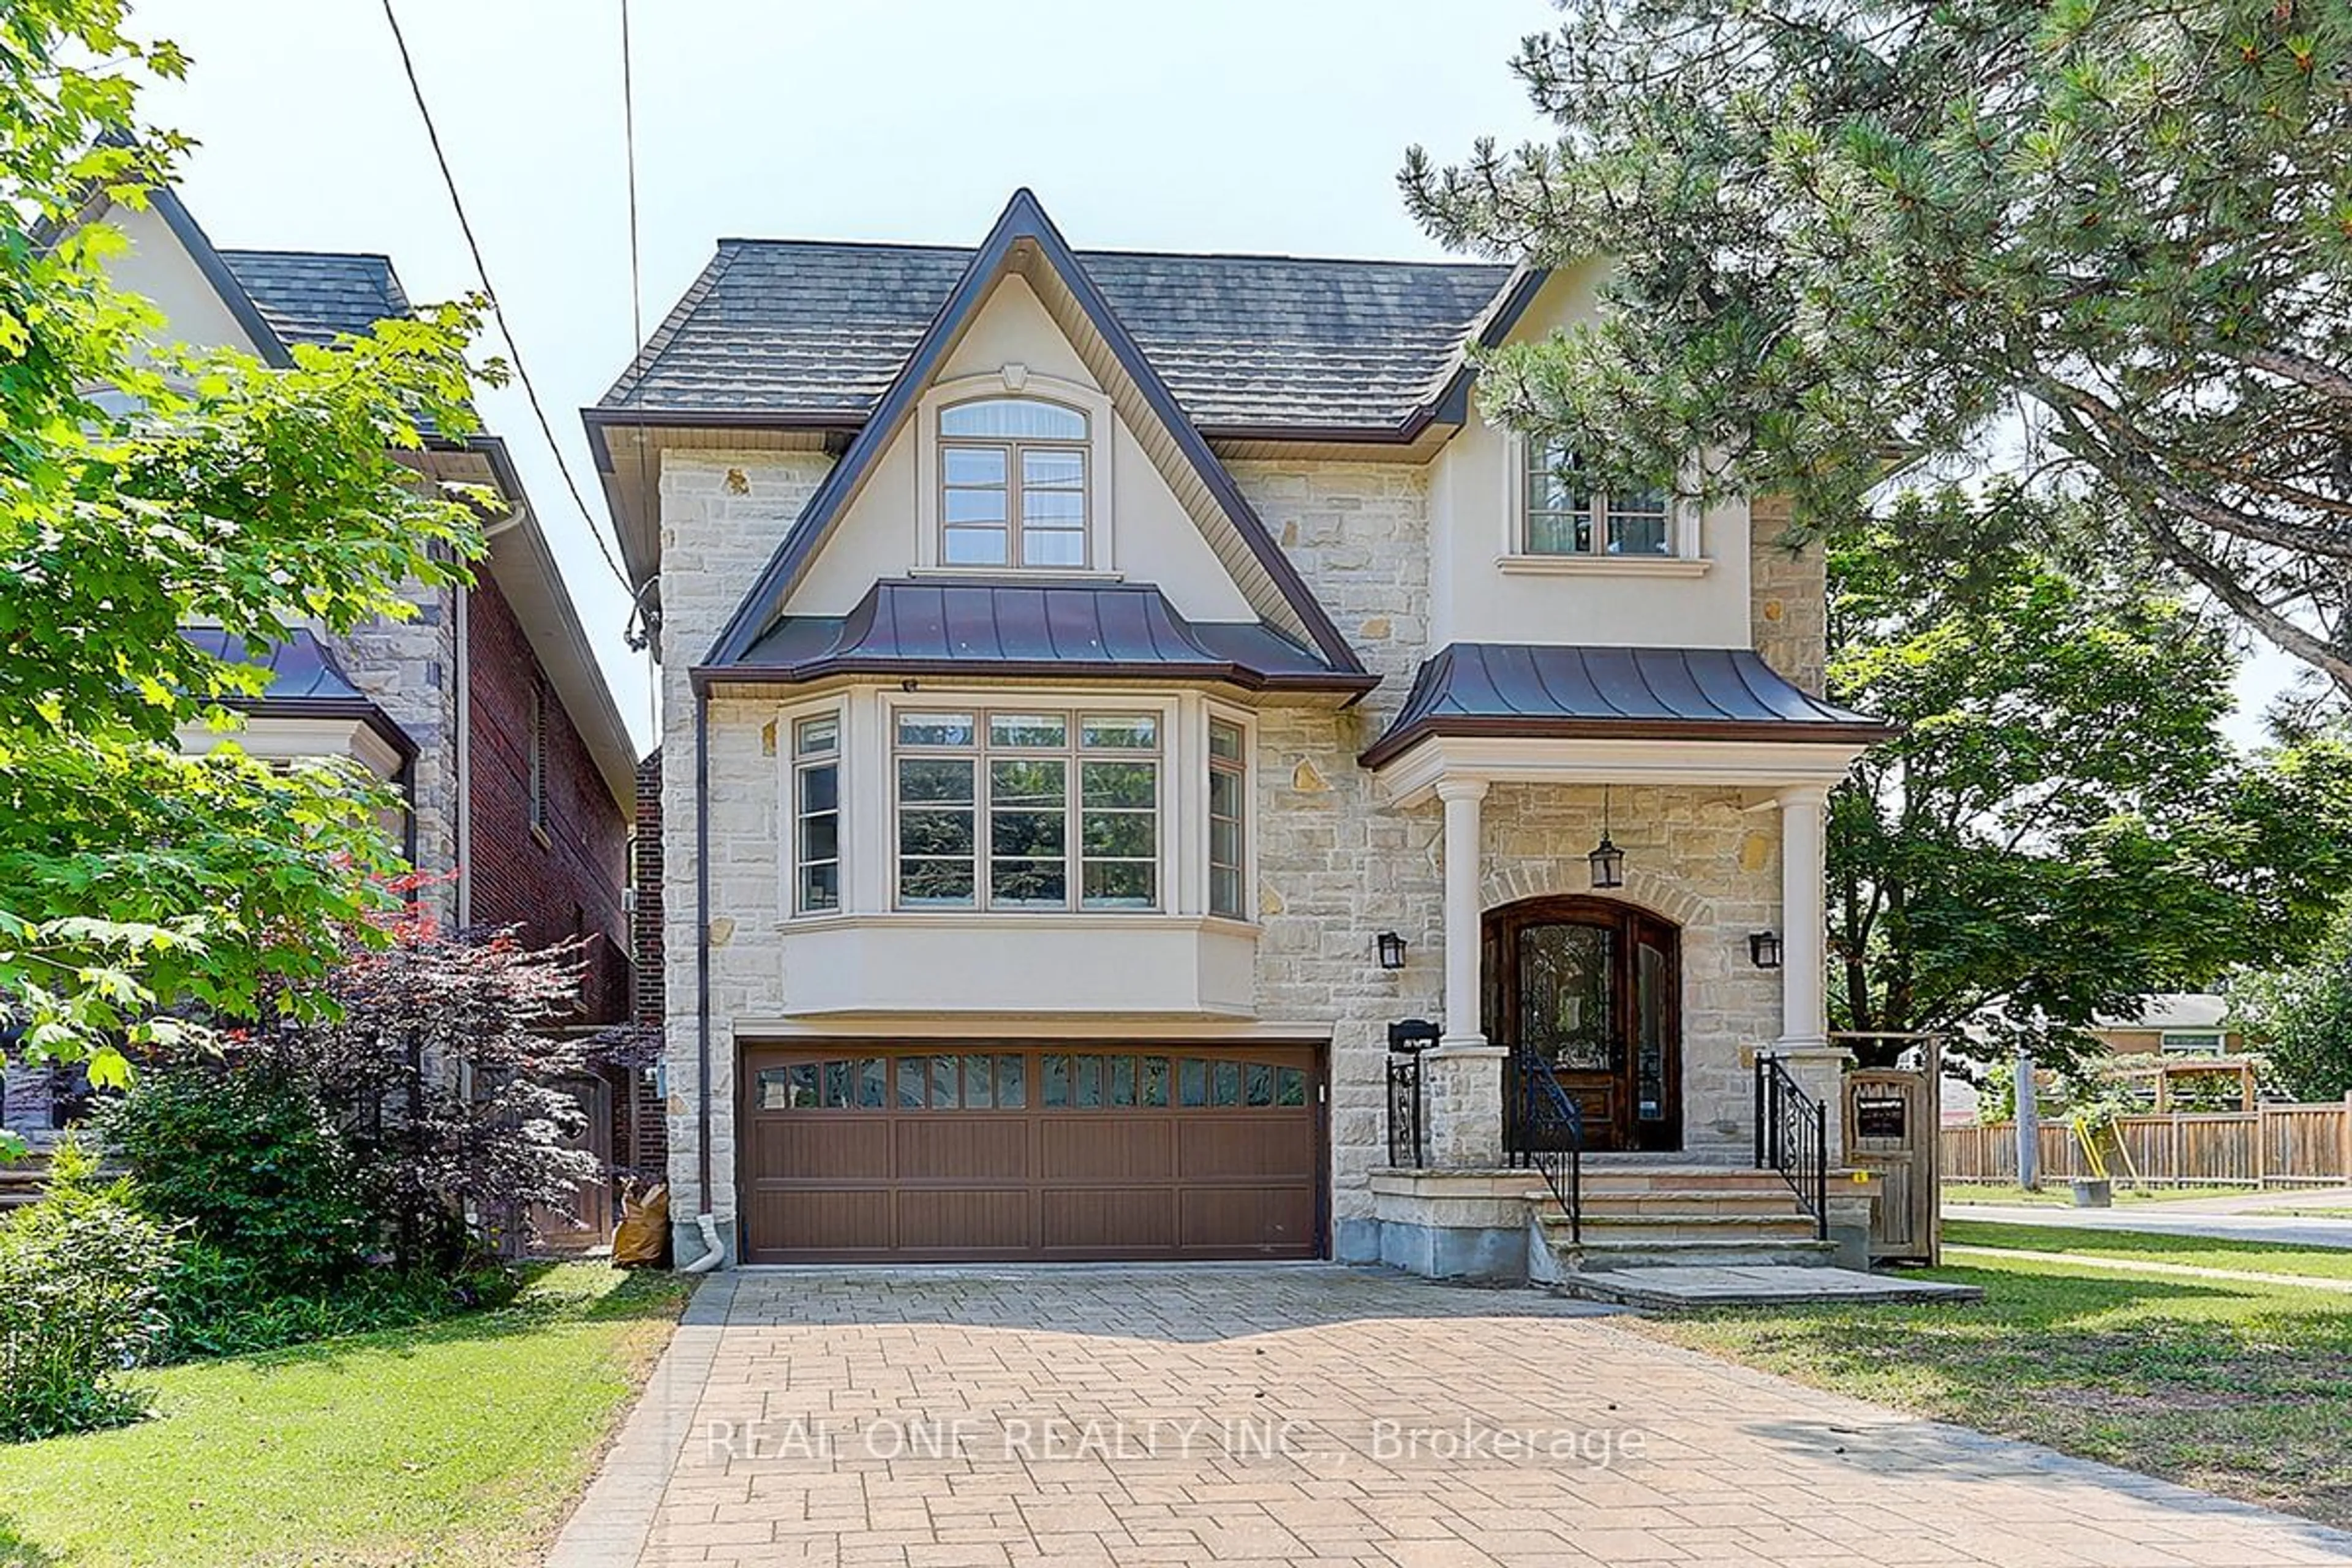 Home with brick exterior material for 297 Churchill Ave, Toronto Ontario M2R 1E5